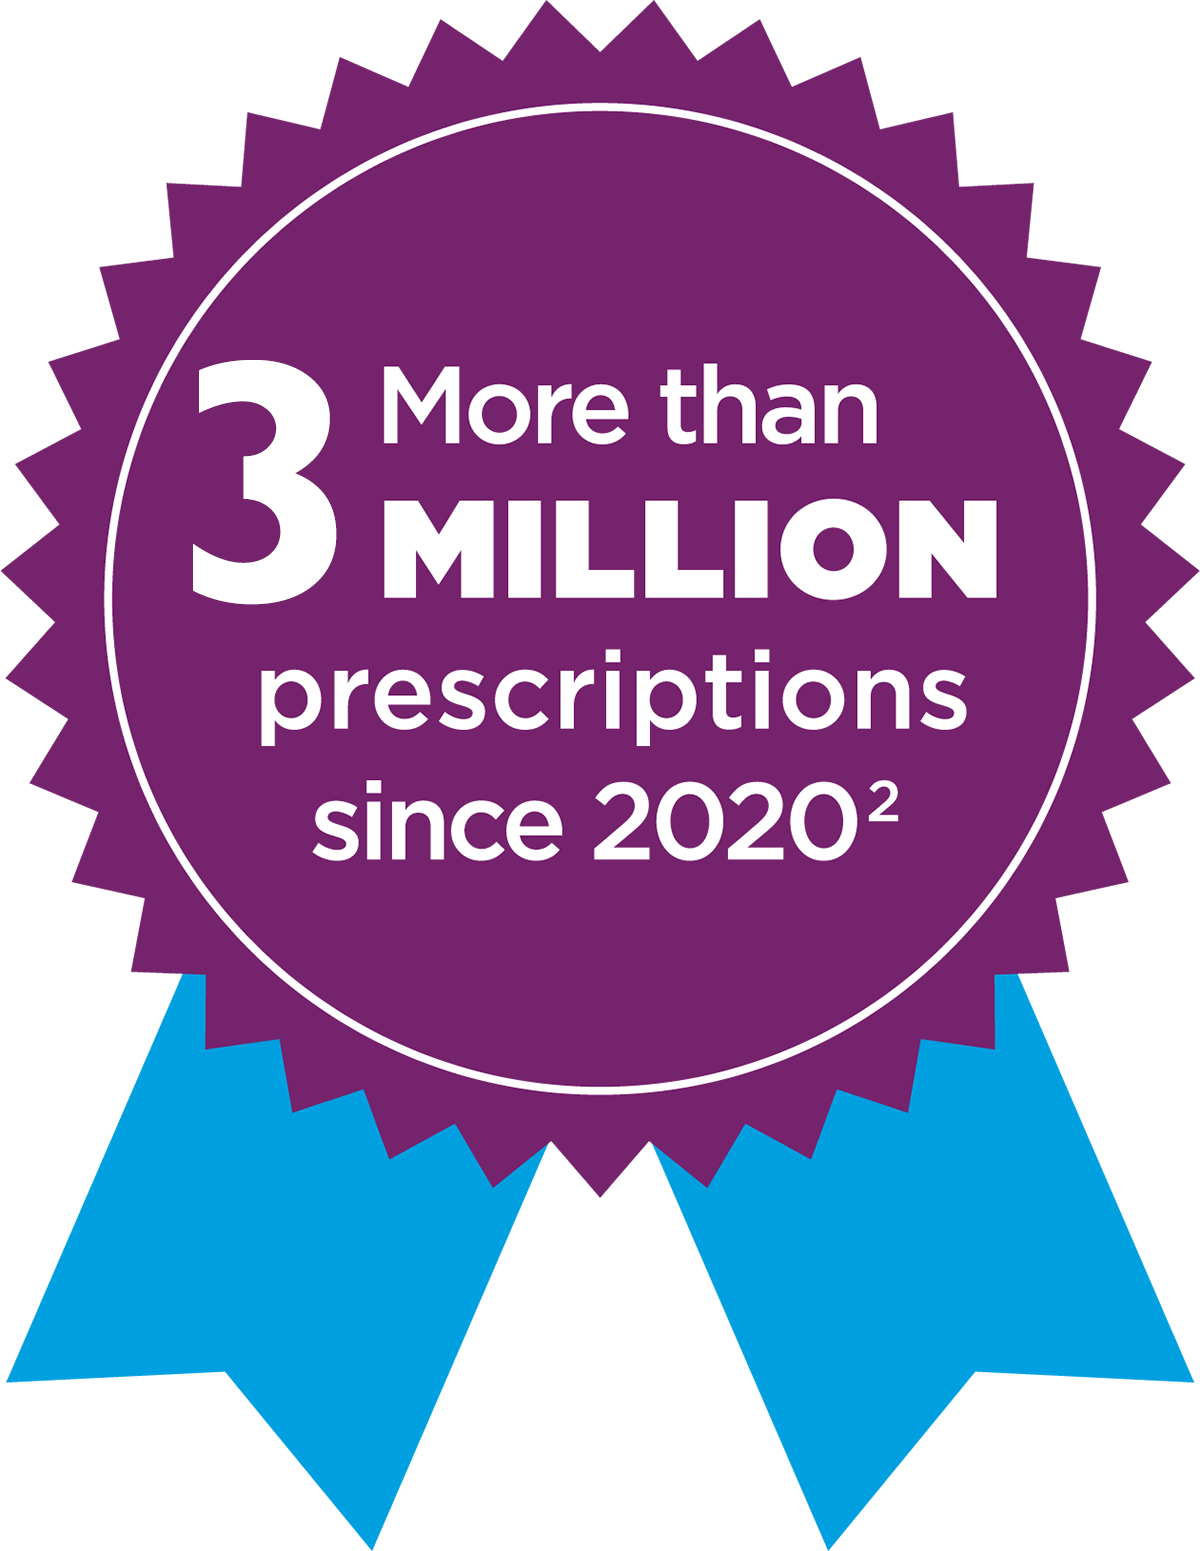 More than 2 Million prescriptions